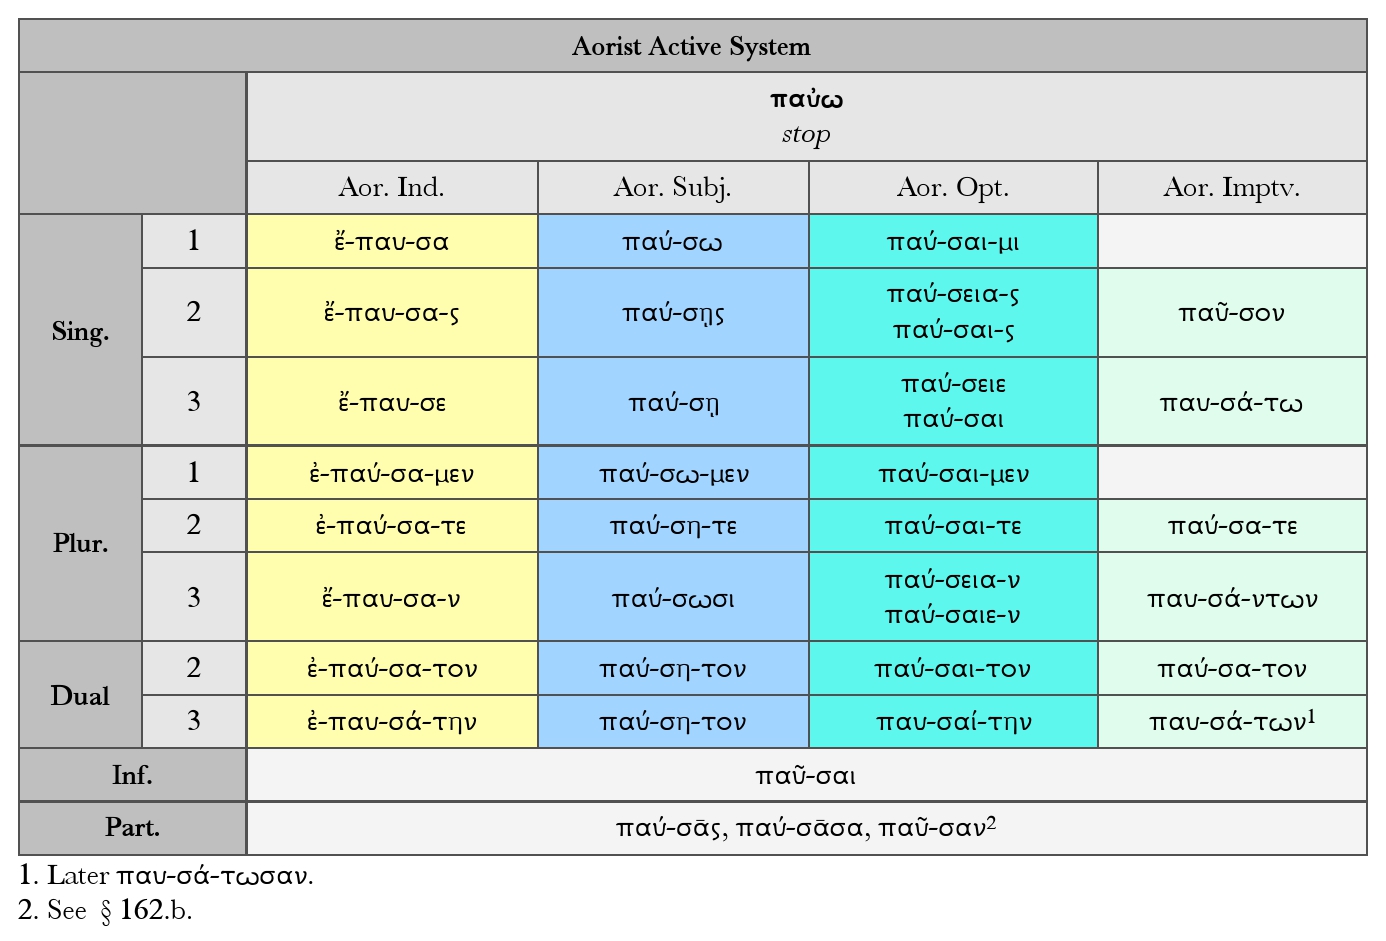 Goodell: Aorist Active System Paradigm Chart παύω